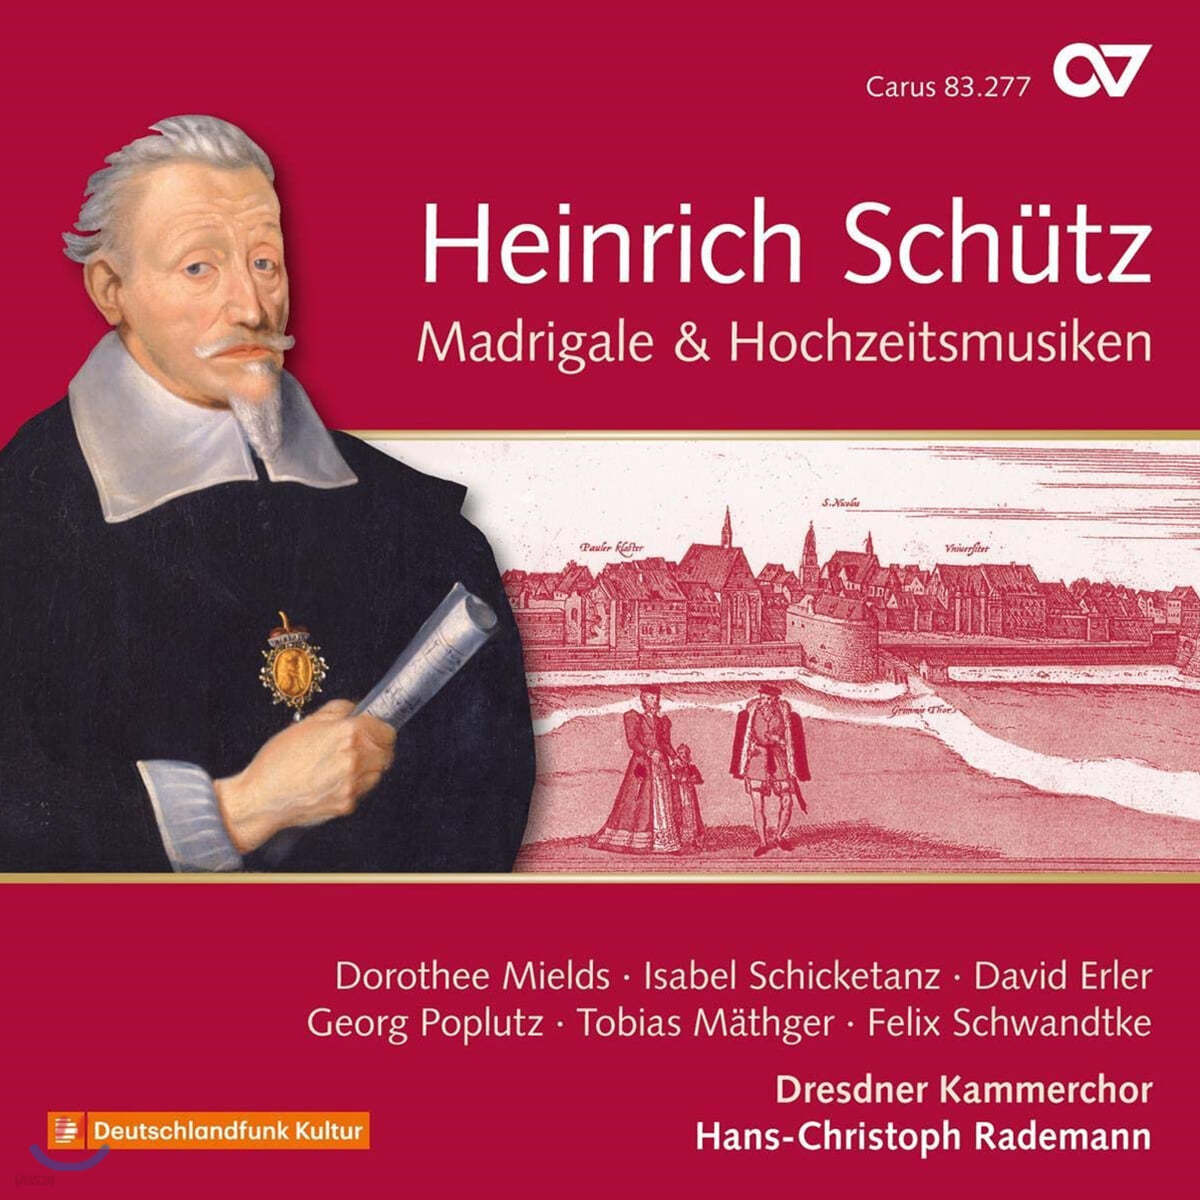 Dorothee Mields 하인리히 쉬츠: 마드리갈과 결혼 음악 (Heinrich Schutz: Madrigale and Hochzeitmusiken)